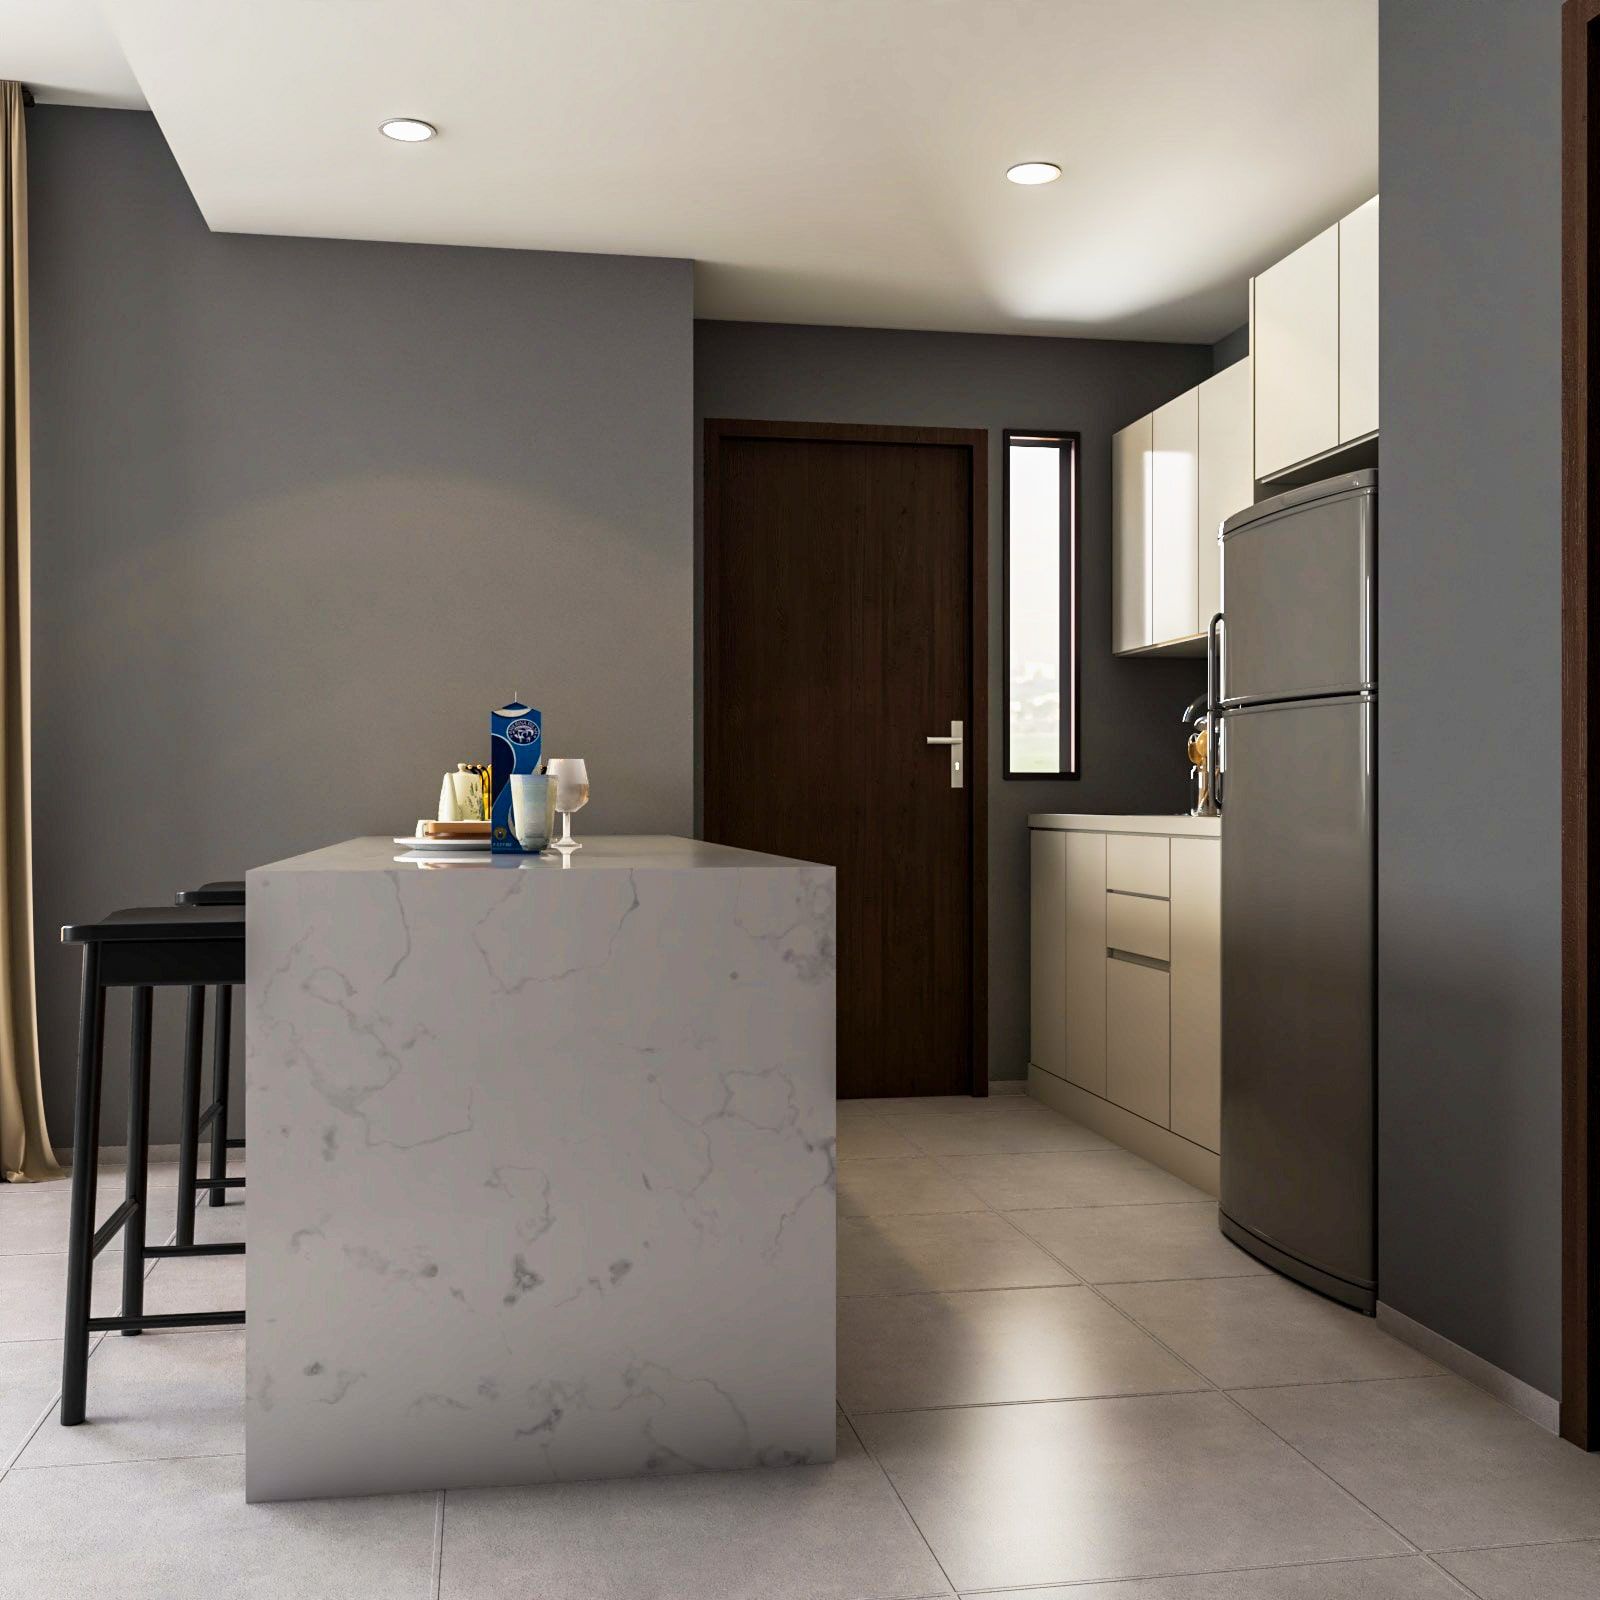 Contemporary Open Kitchen Cabinet Design